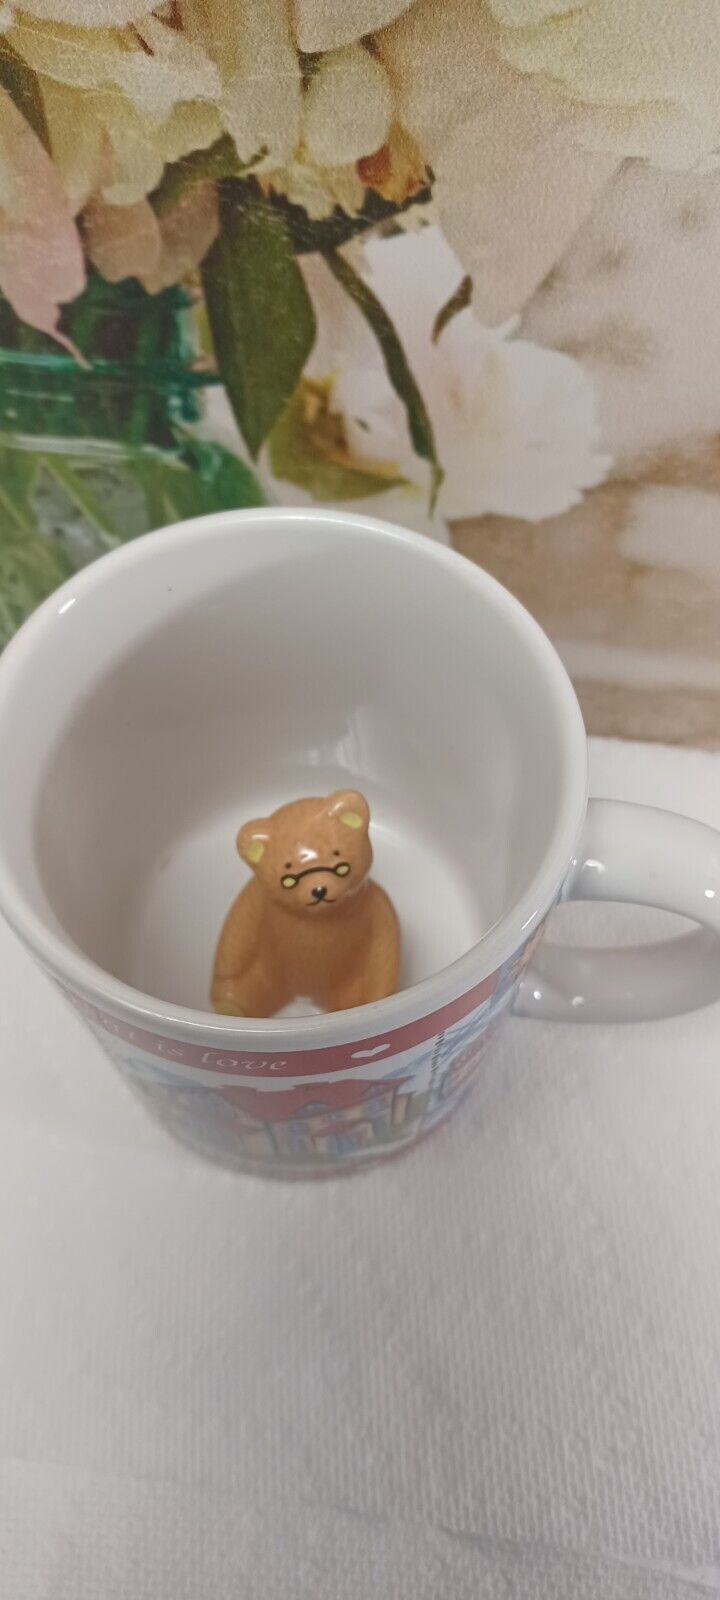 Avon A Grandparent is Love Coffee Cup/Mug With Teddy Bear Fig. on Inside Bottom